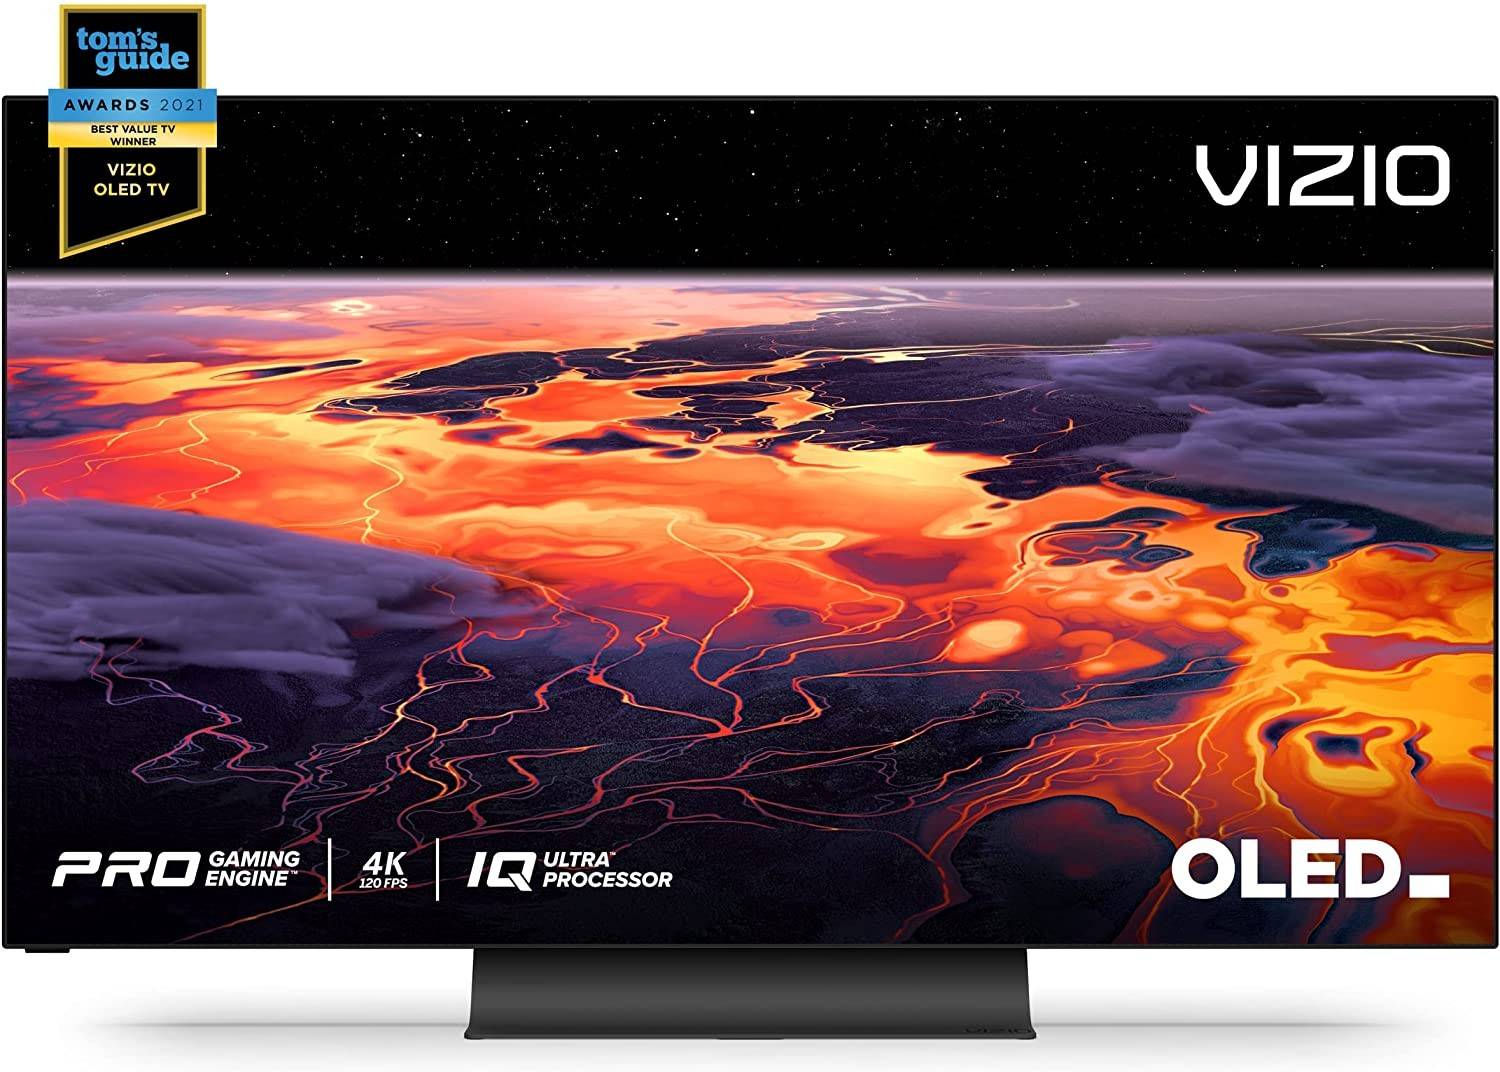 VIZIO OLED Premium 4K UHD HDR Smart TV